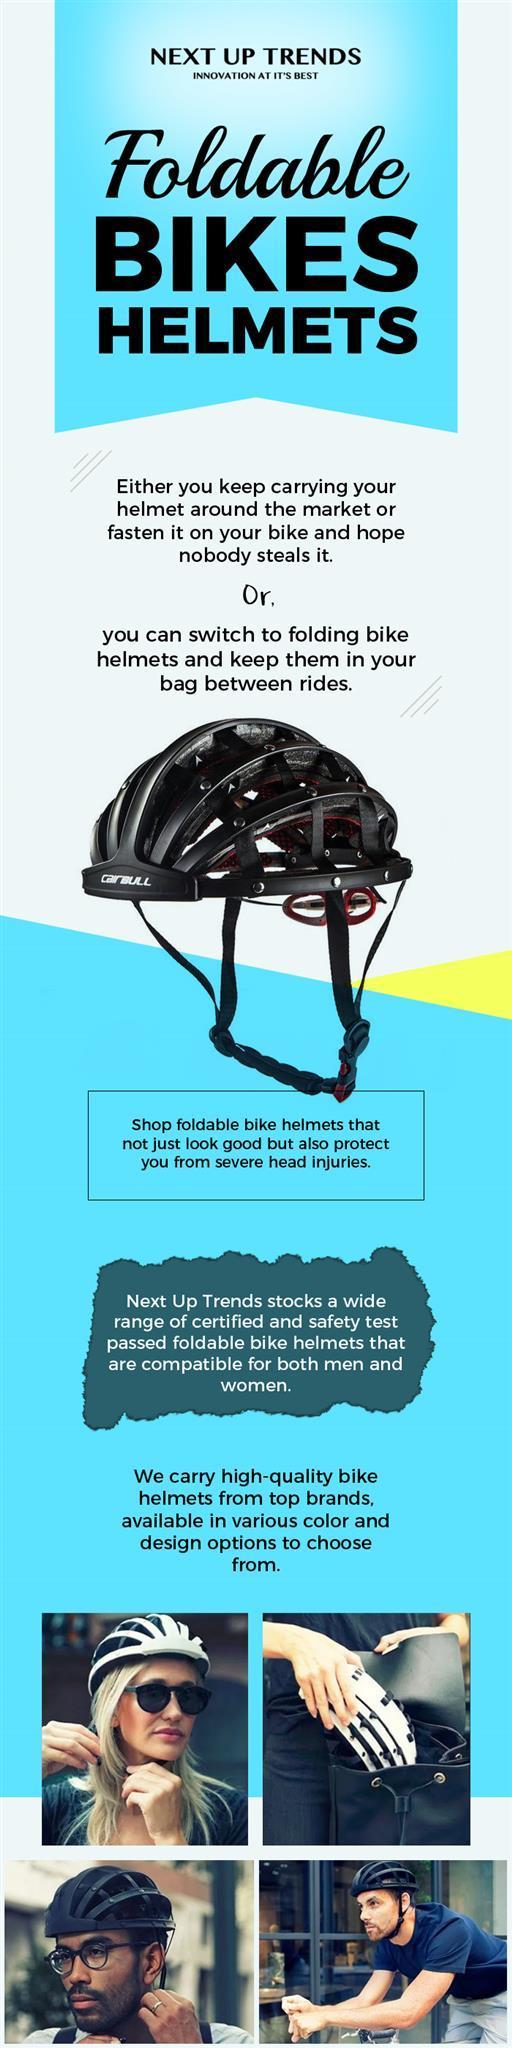 Buy Next Gen Folding Bike Helmets from Next Up Trends